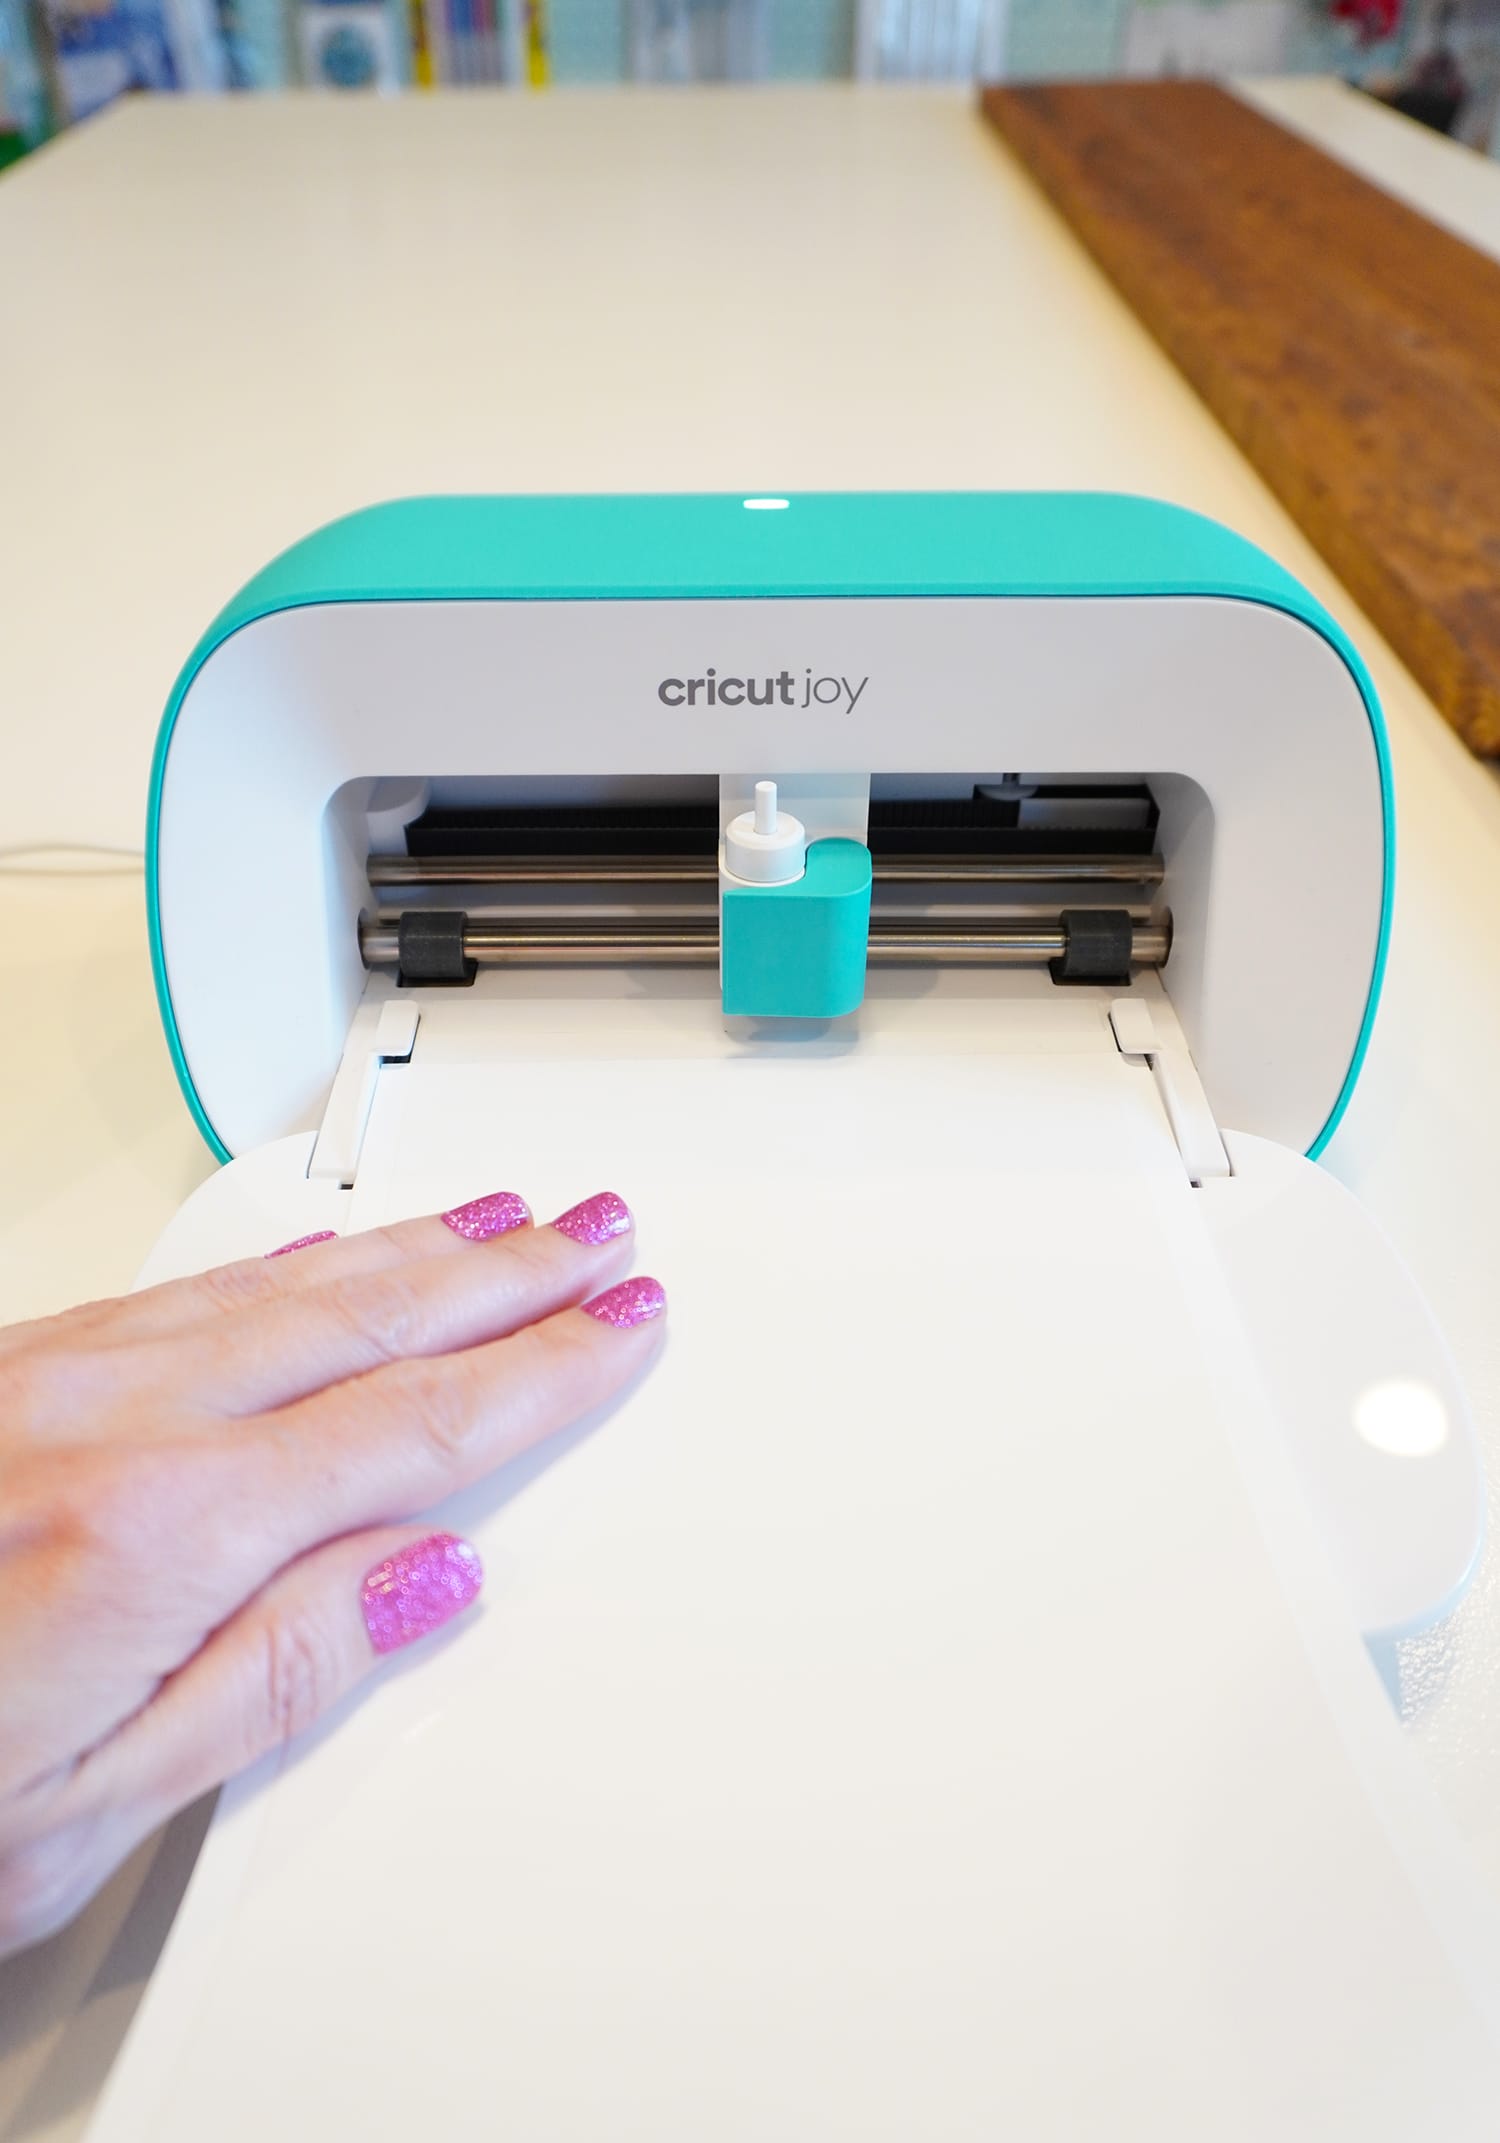 cricut joy with hand feeding smart vinyl into machine